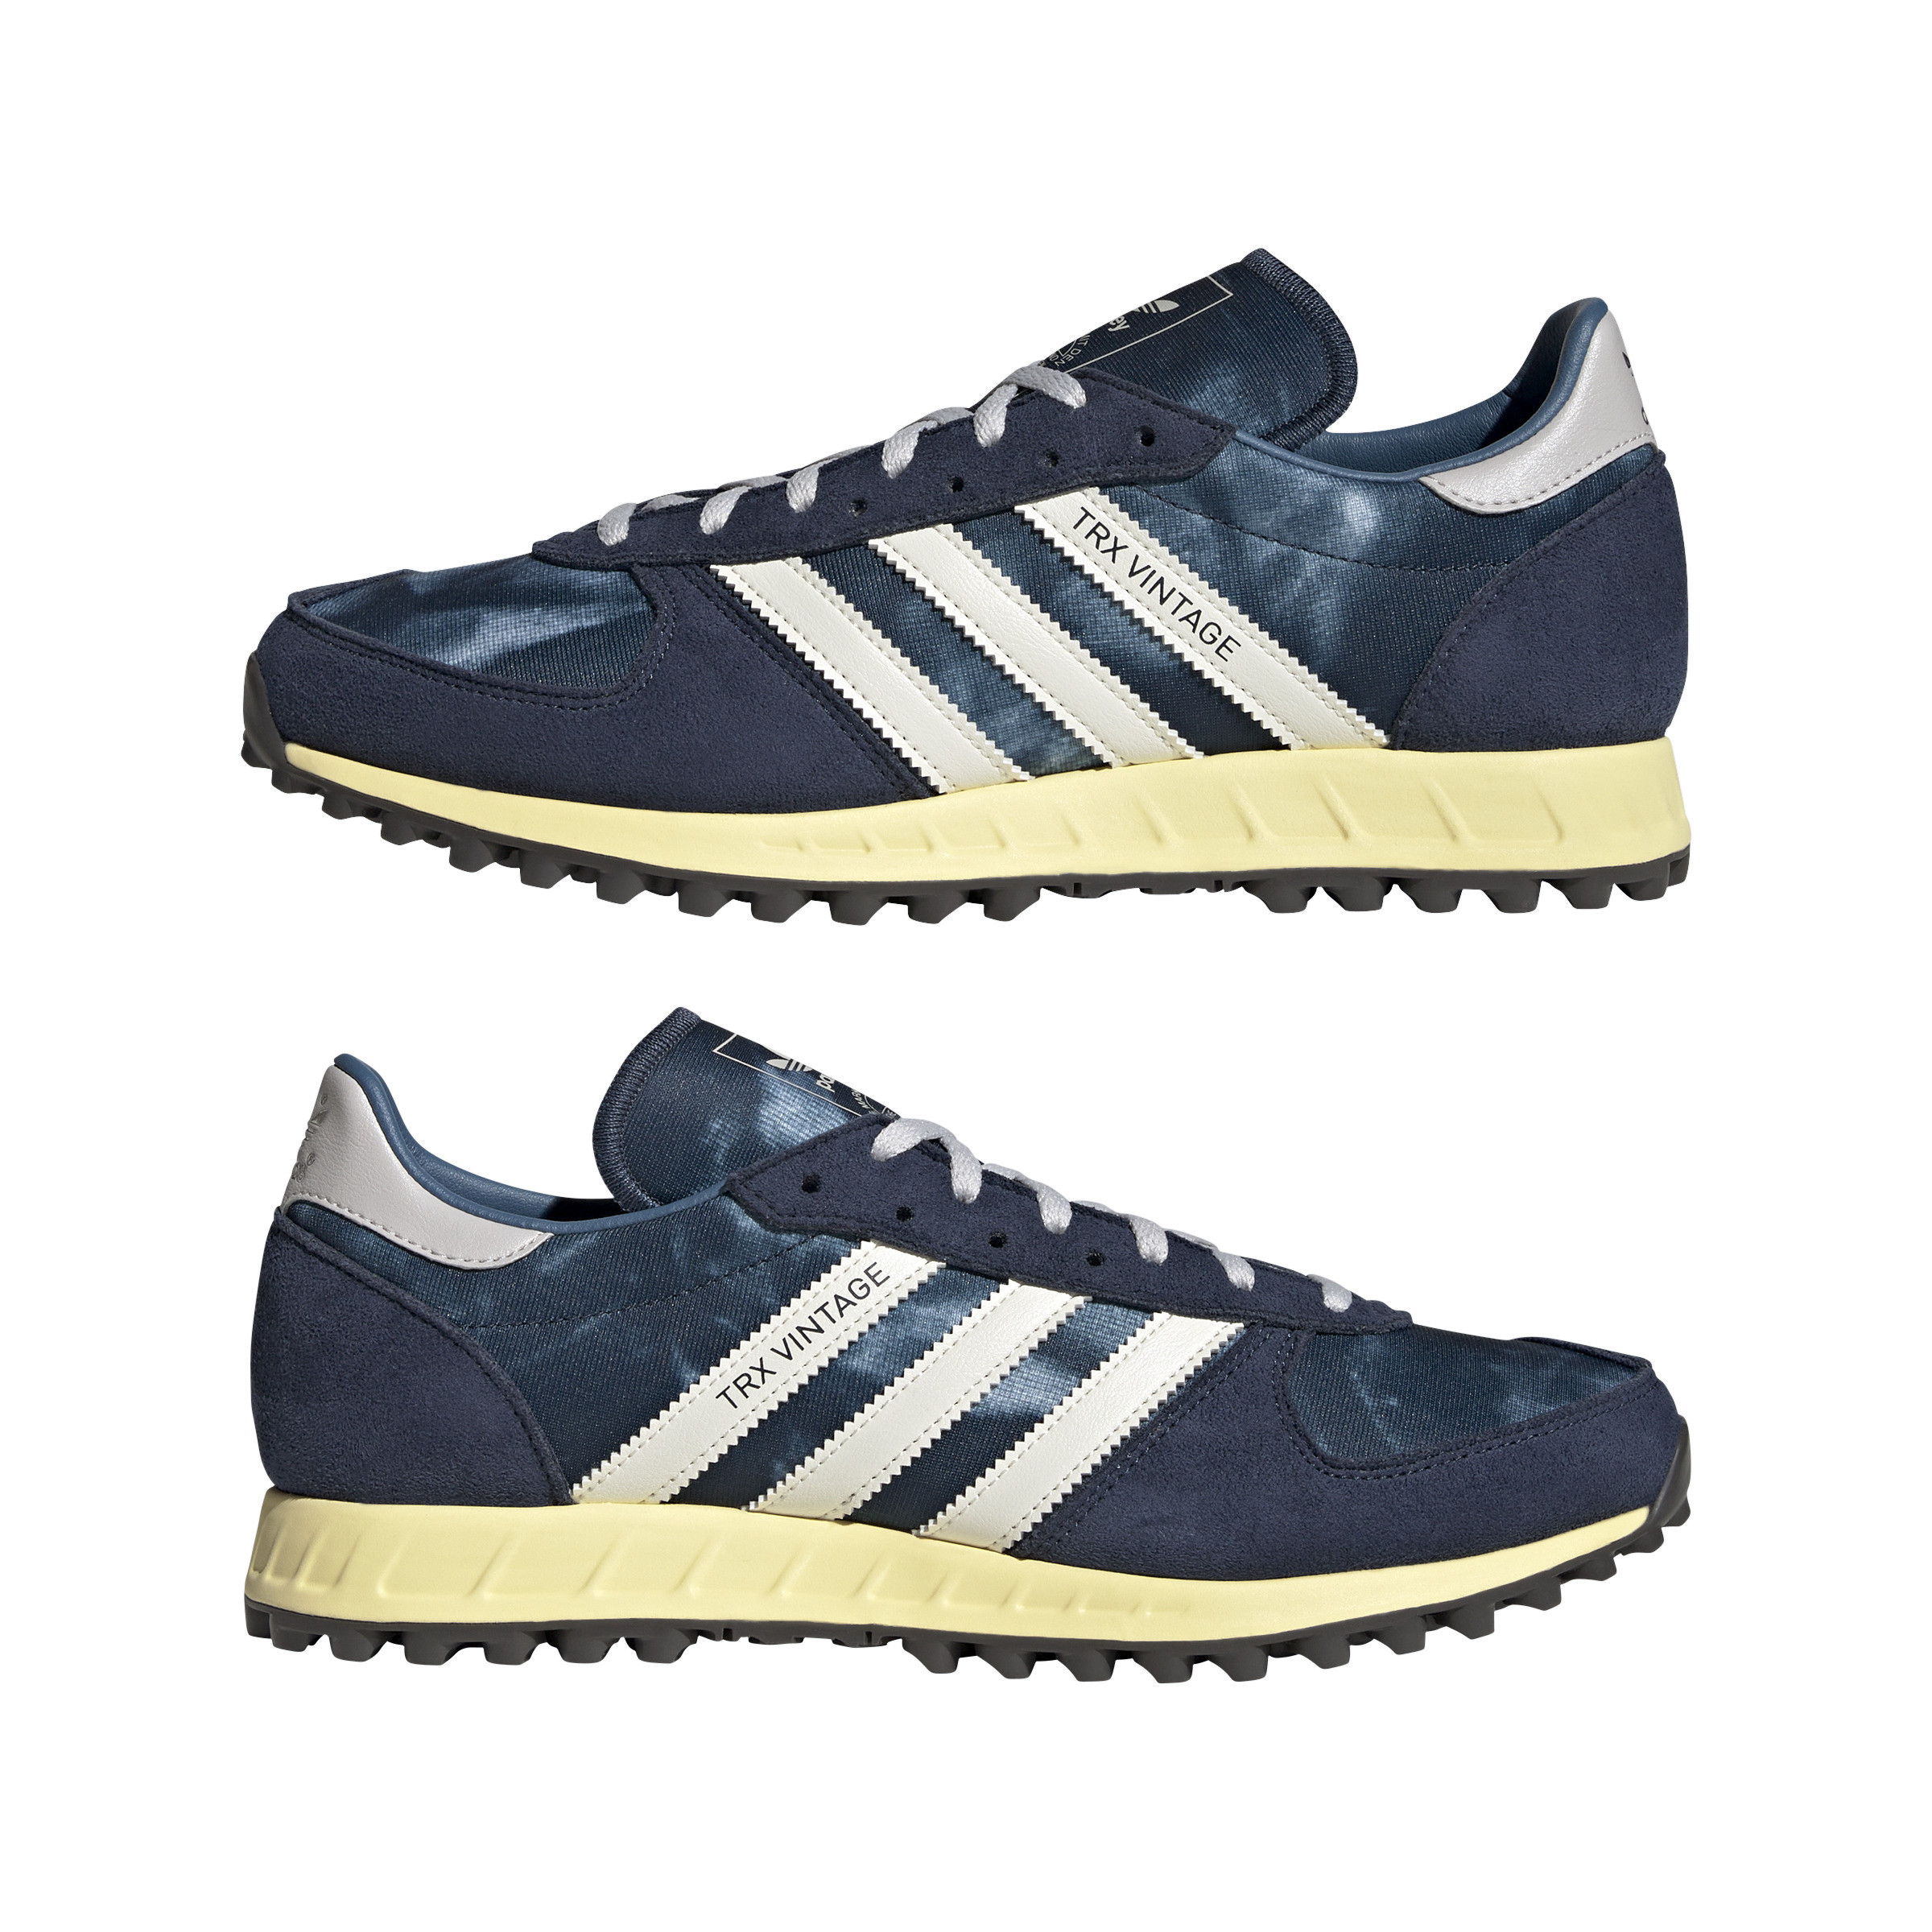 Adidas - Adidas Trx Vintage Shoes, Blue, large image number 9